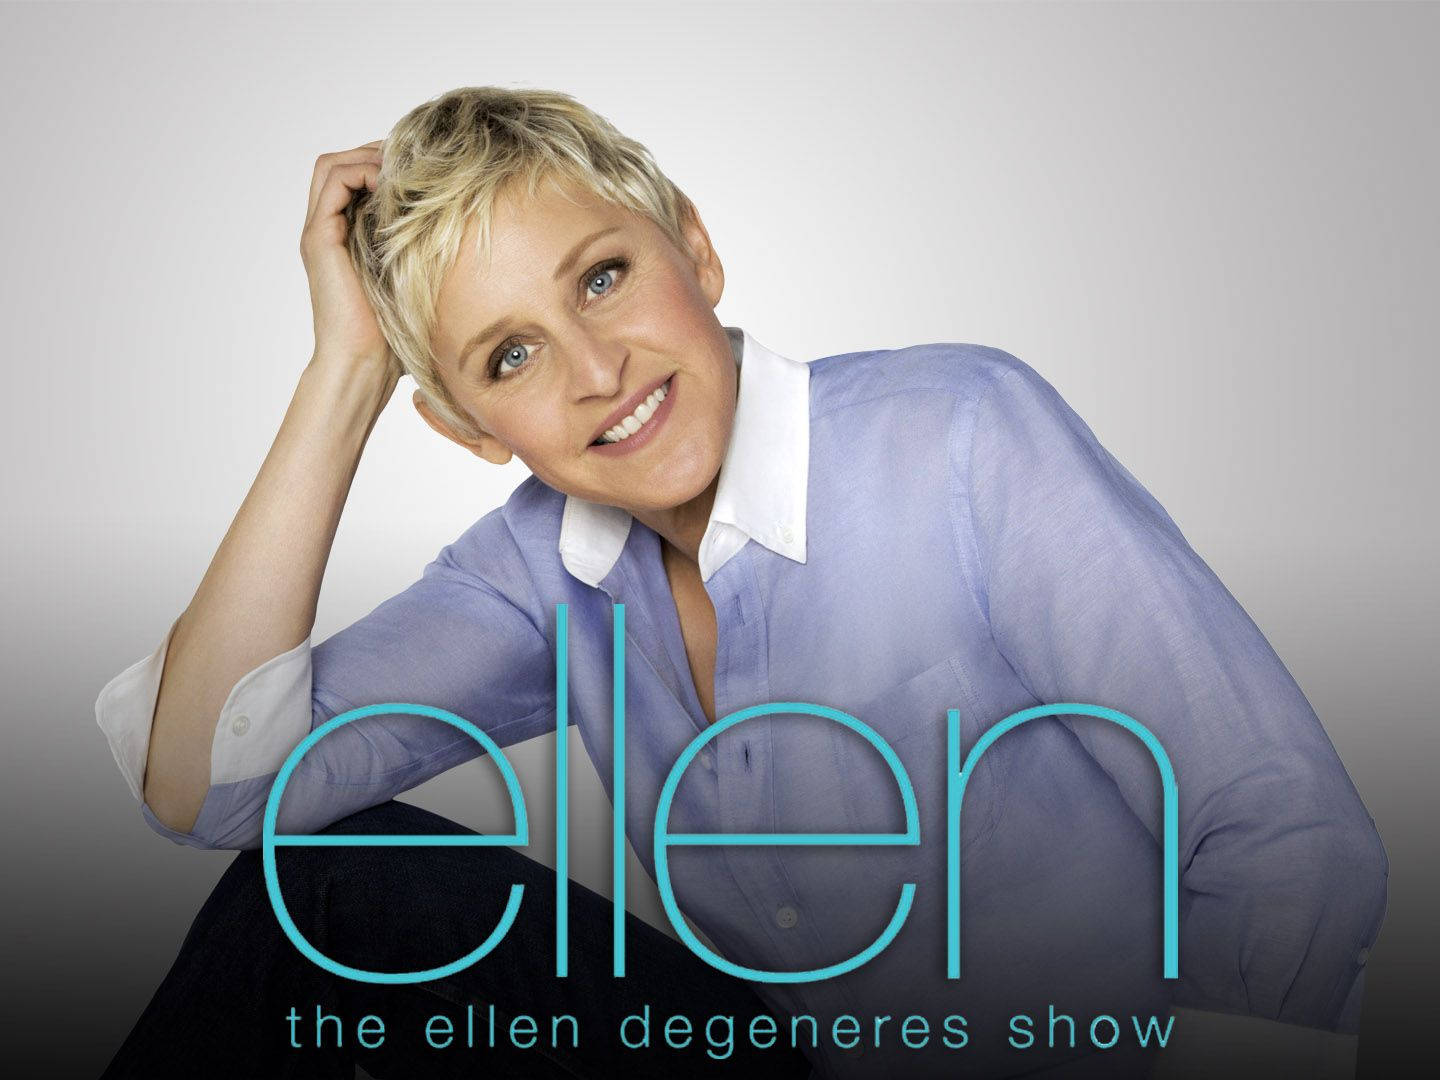 The Ellen Show Poster Wallpaper